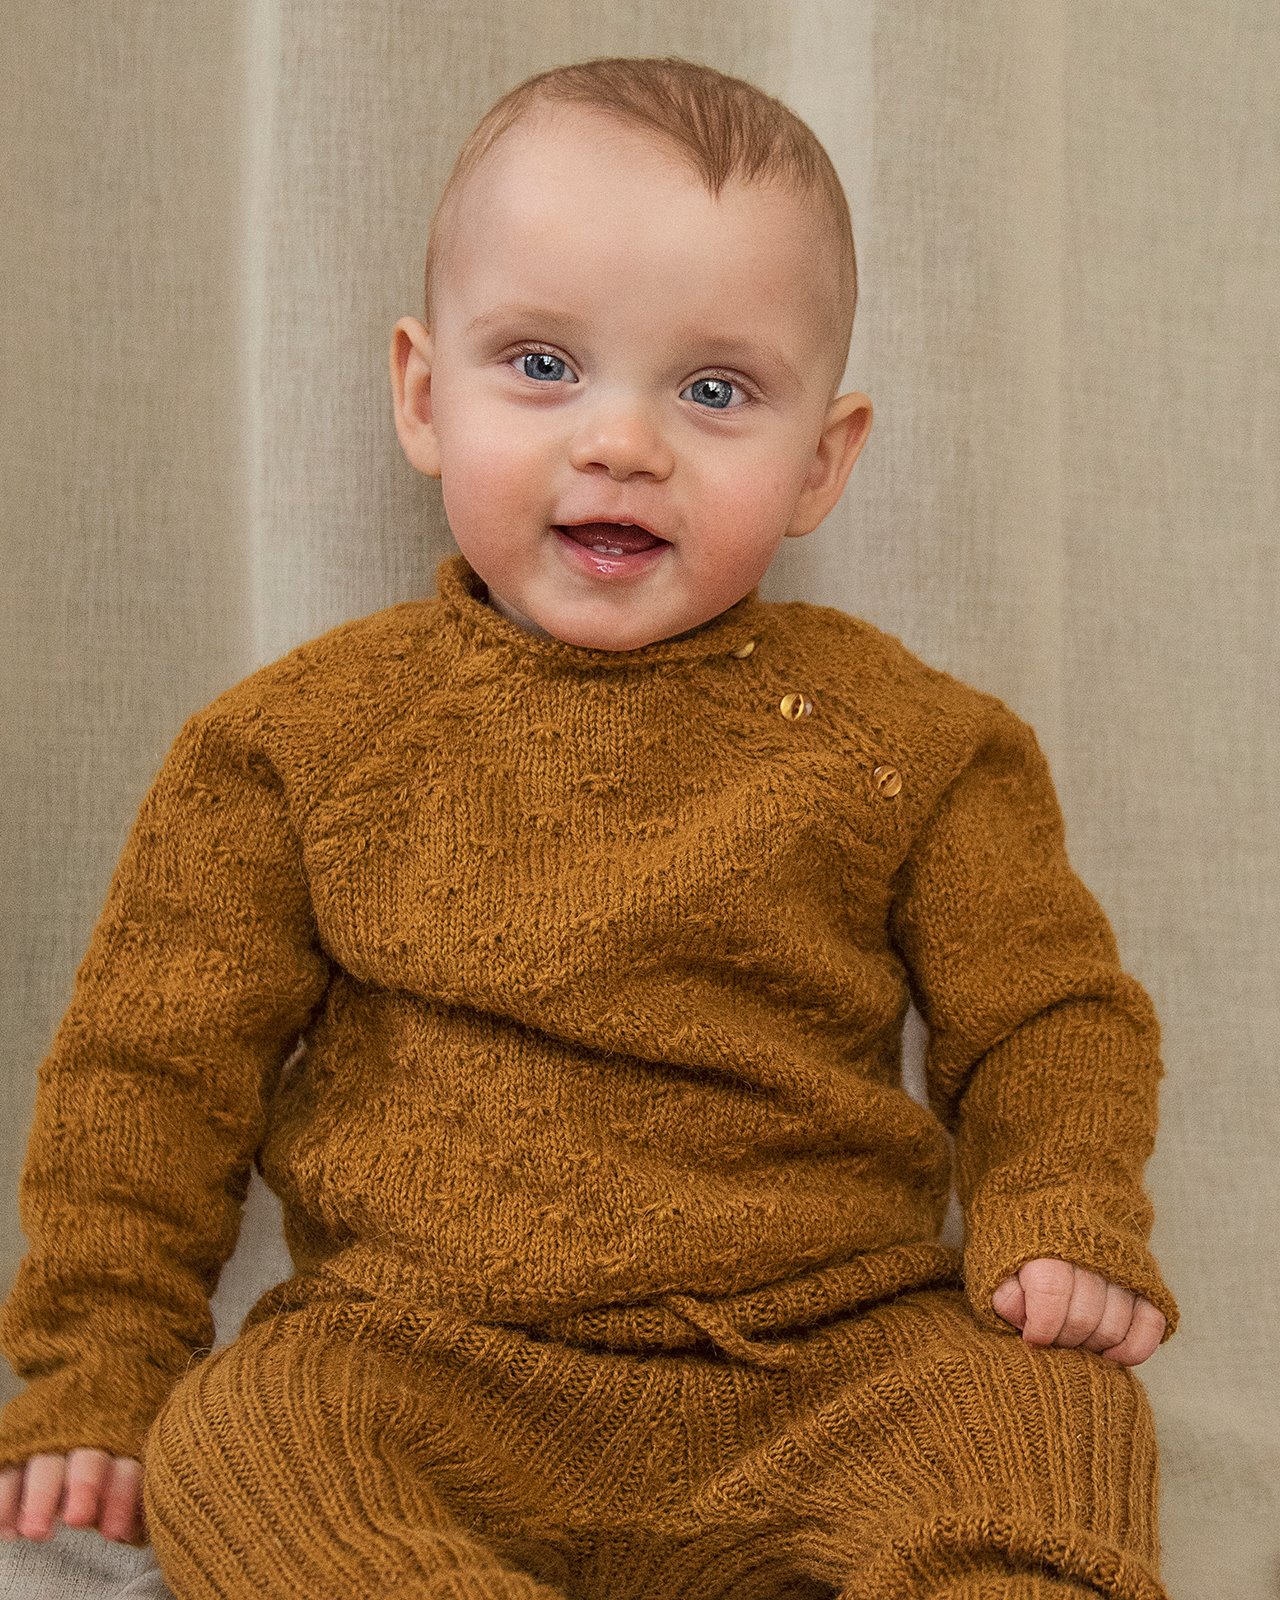 FRAYA strikkeoppskrift - Soft Cuddles Baby Sweater, barn & baby - Woolly Version FRAYA6032.jpg